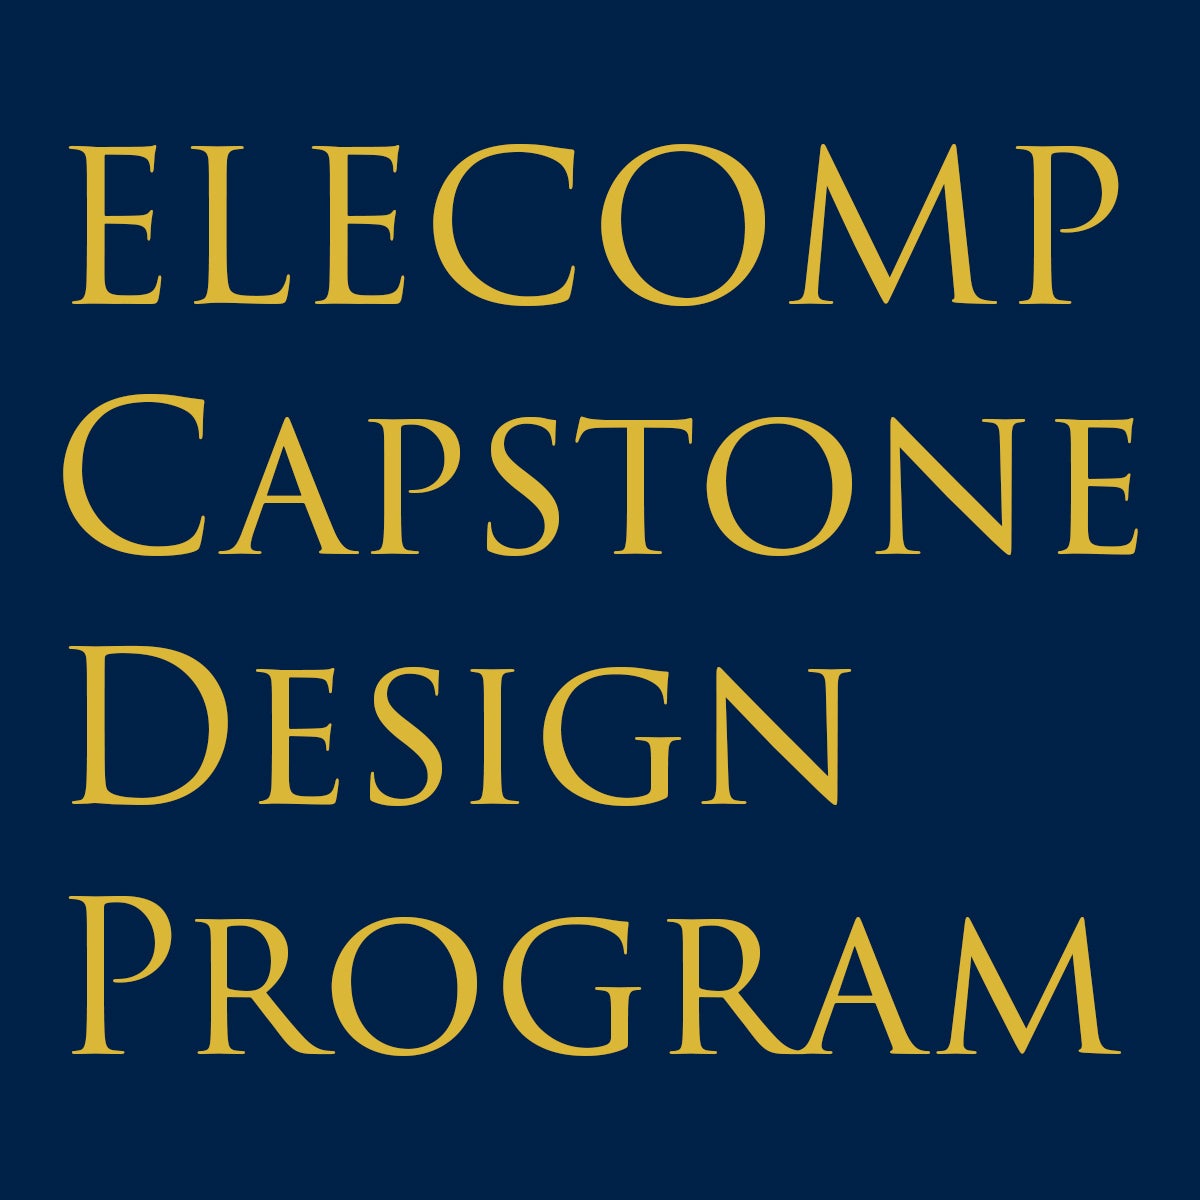 ELECOMP Capstone Design Program